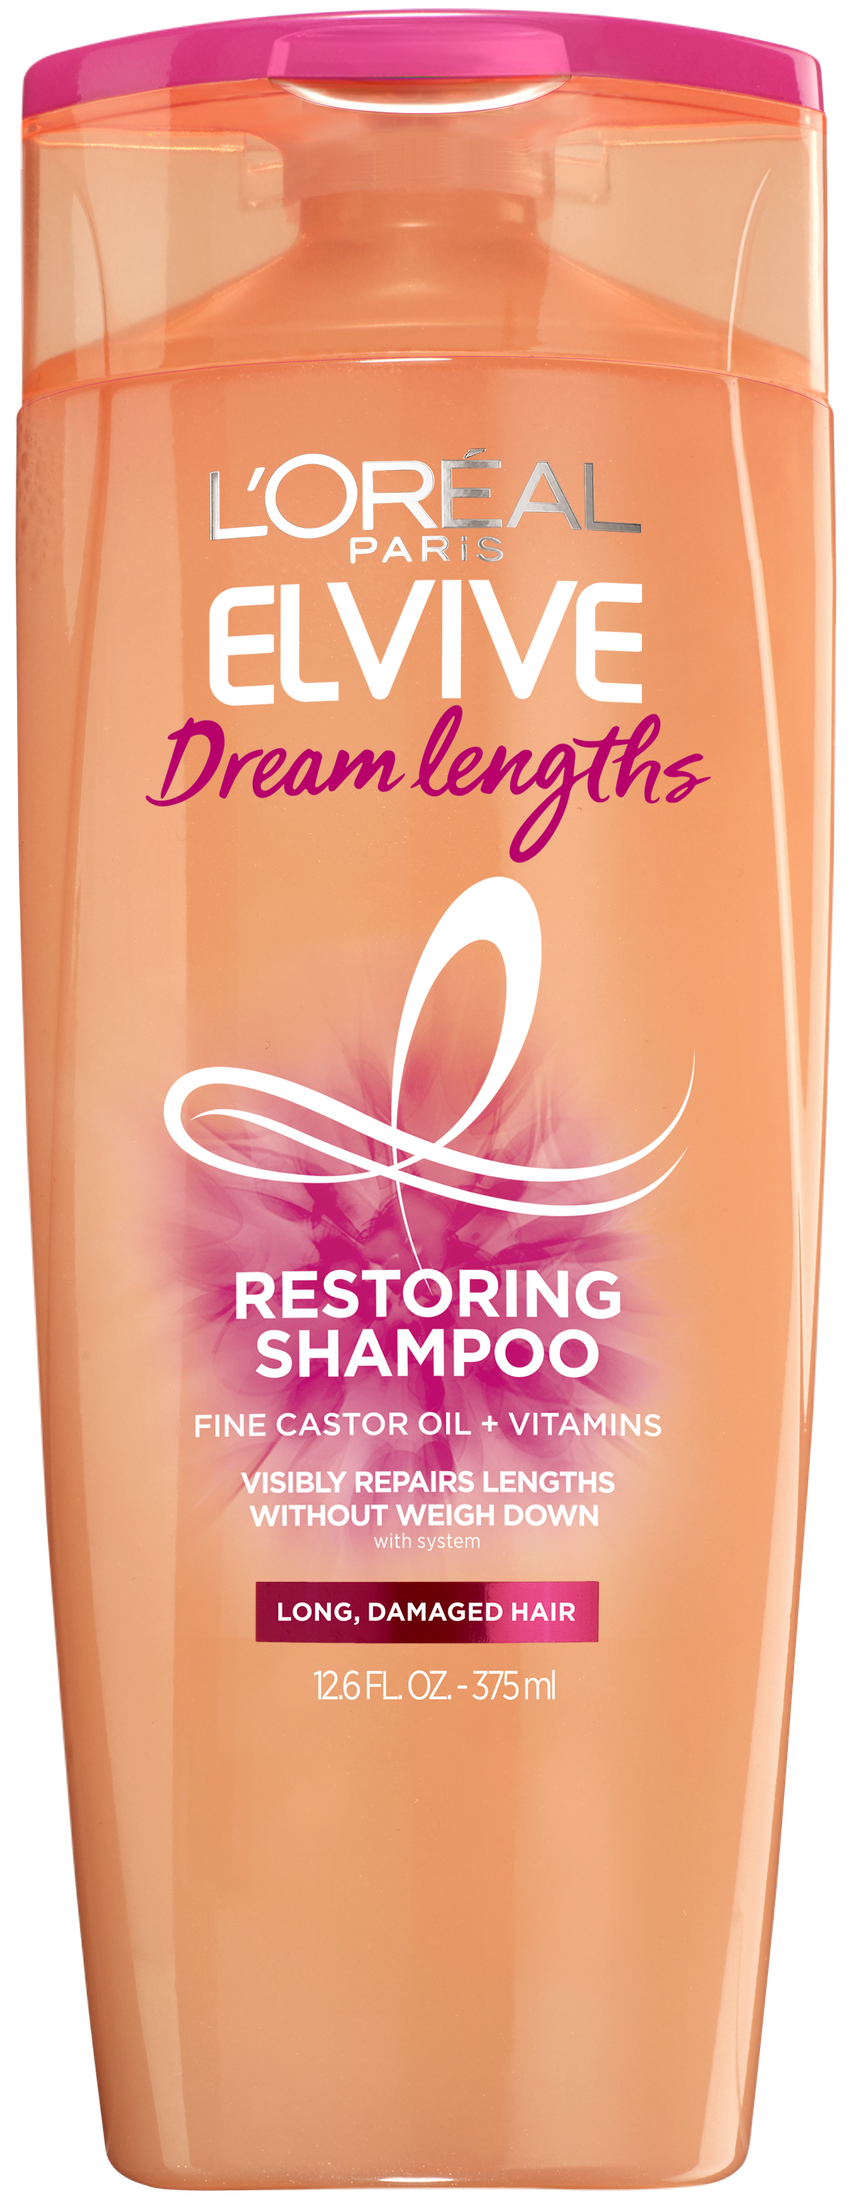 L'Oreal Paris Elvive Dream Lengths Restoring Shampoo, 12.6 fl oz - image 1 of 8